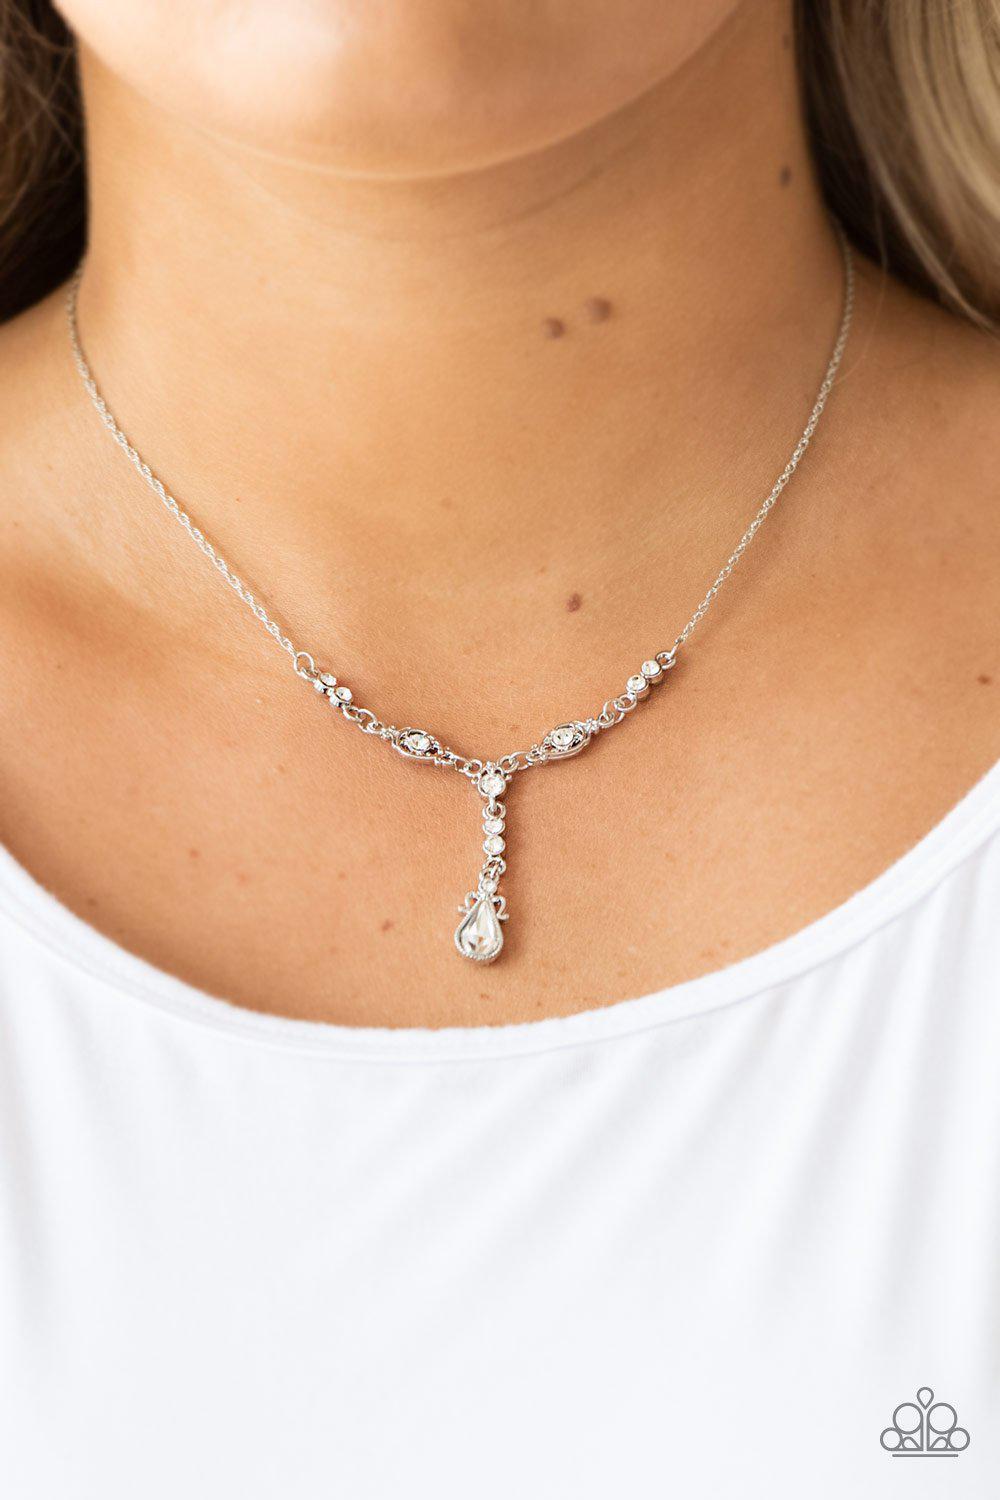 Diva Dazzle White Rhinestone Necklace - Paparazzi Accessories - model -CarasShop.com - $5 Jewelry by Cara Jewels